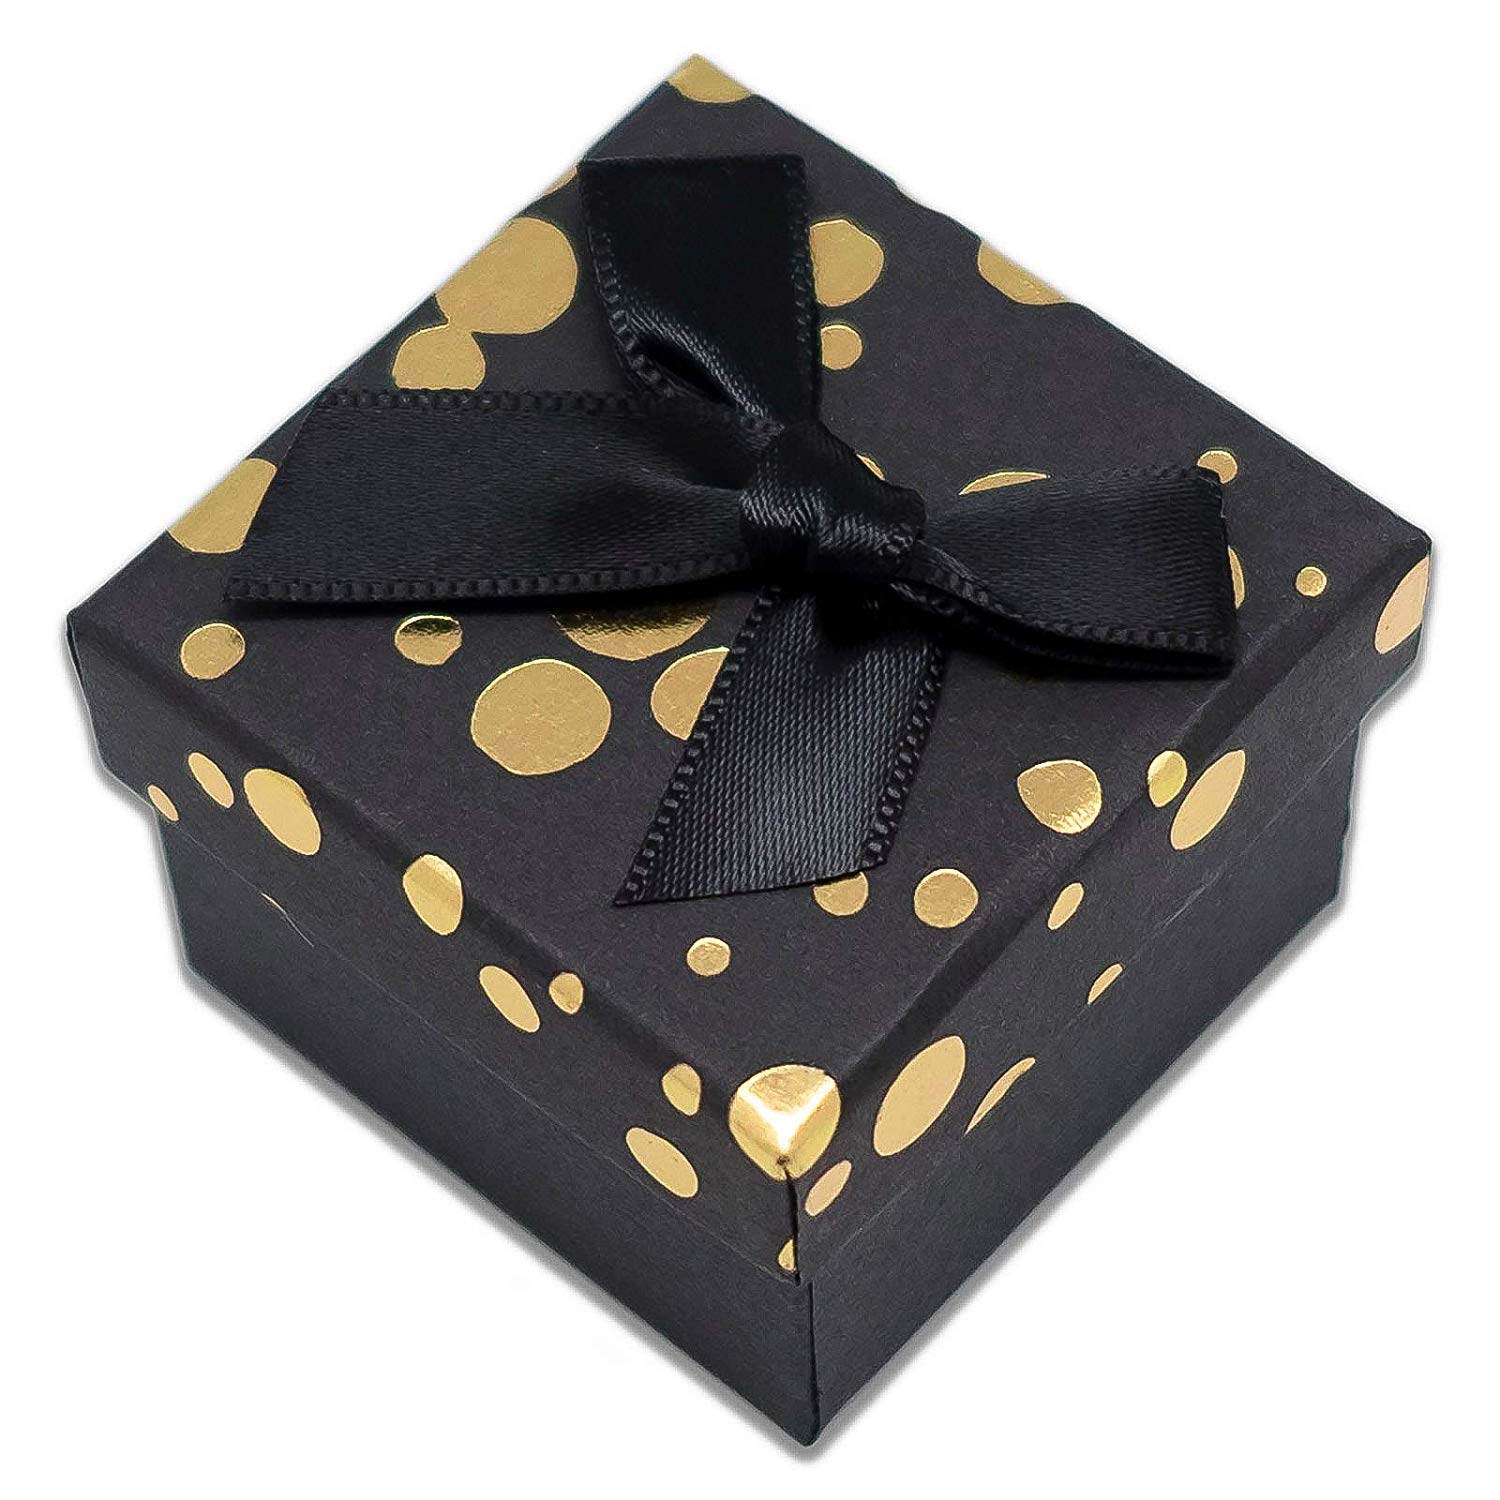 1 3/4" x 1 3/4" Black and Gold Polka Dot Cardboard Ribbon Bow Jewelry Box